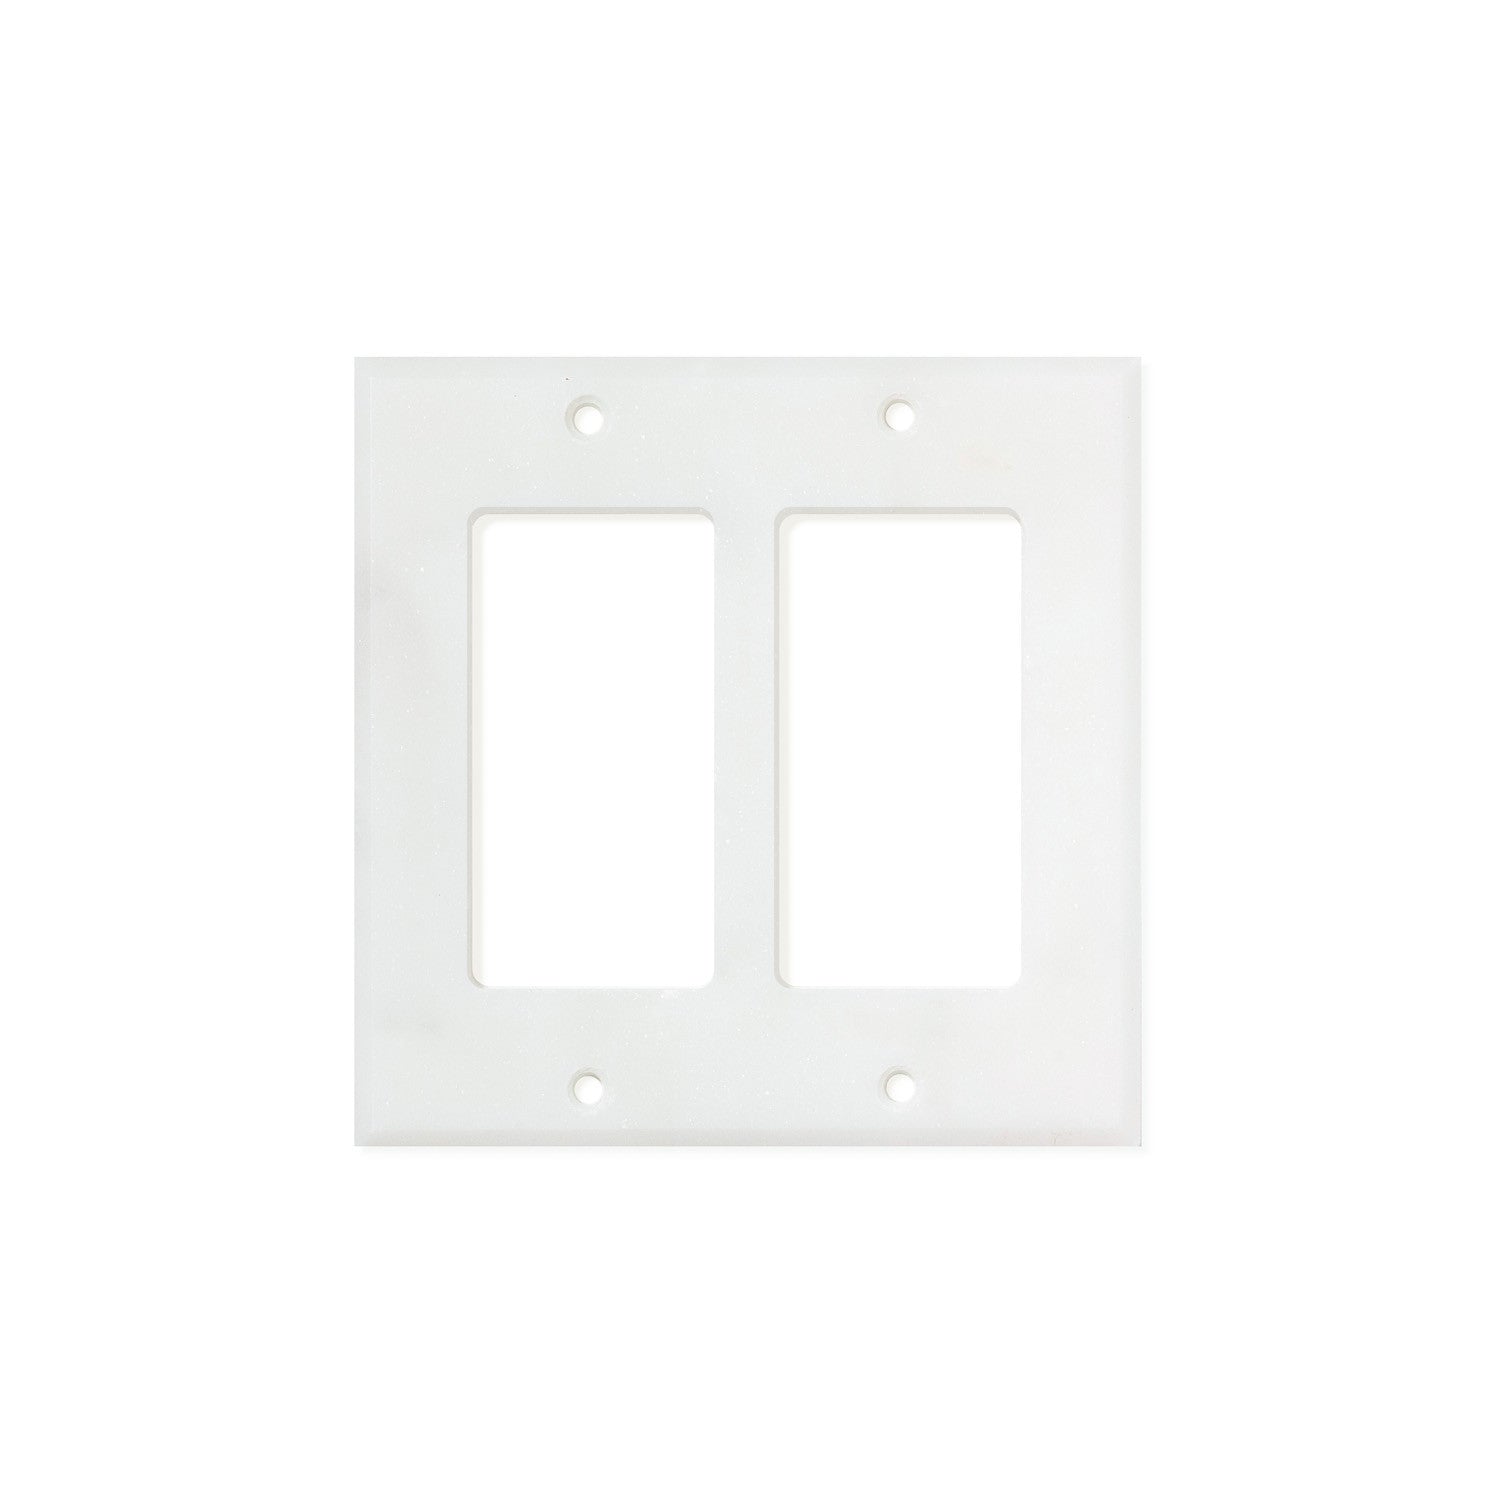 Bianco Carrara (Carrara White) Marble Switch Plate Cover, Honed (2 ROCKER) - Tilephile